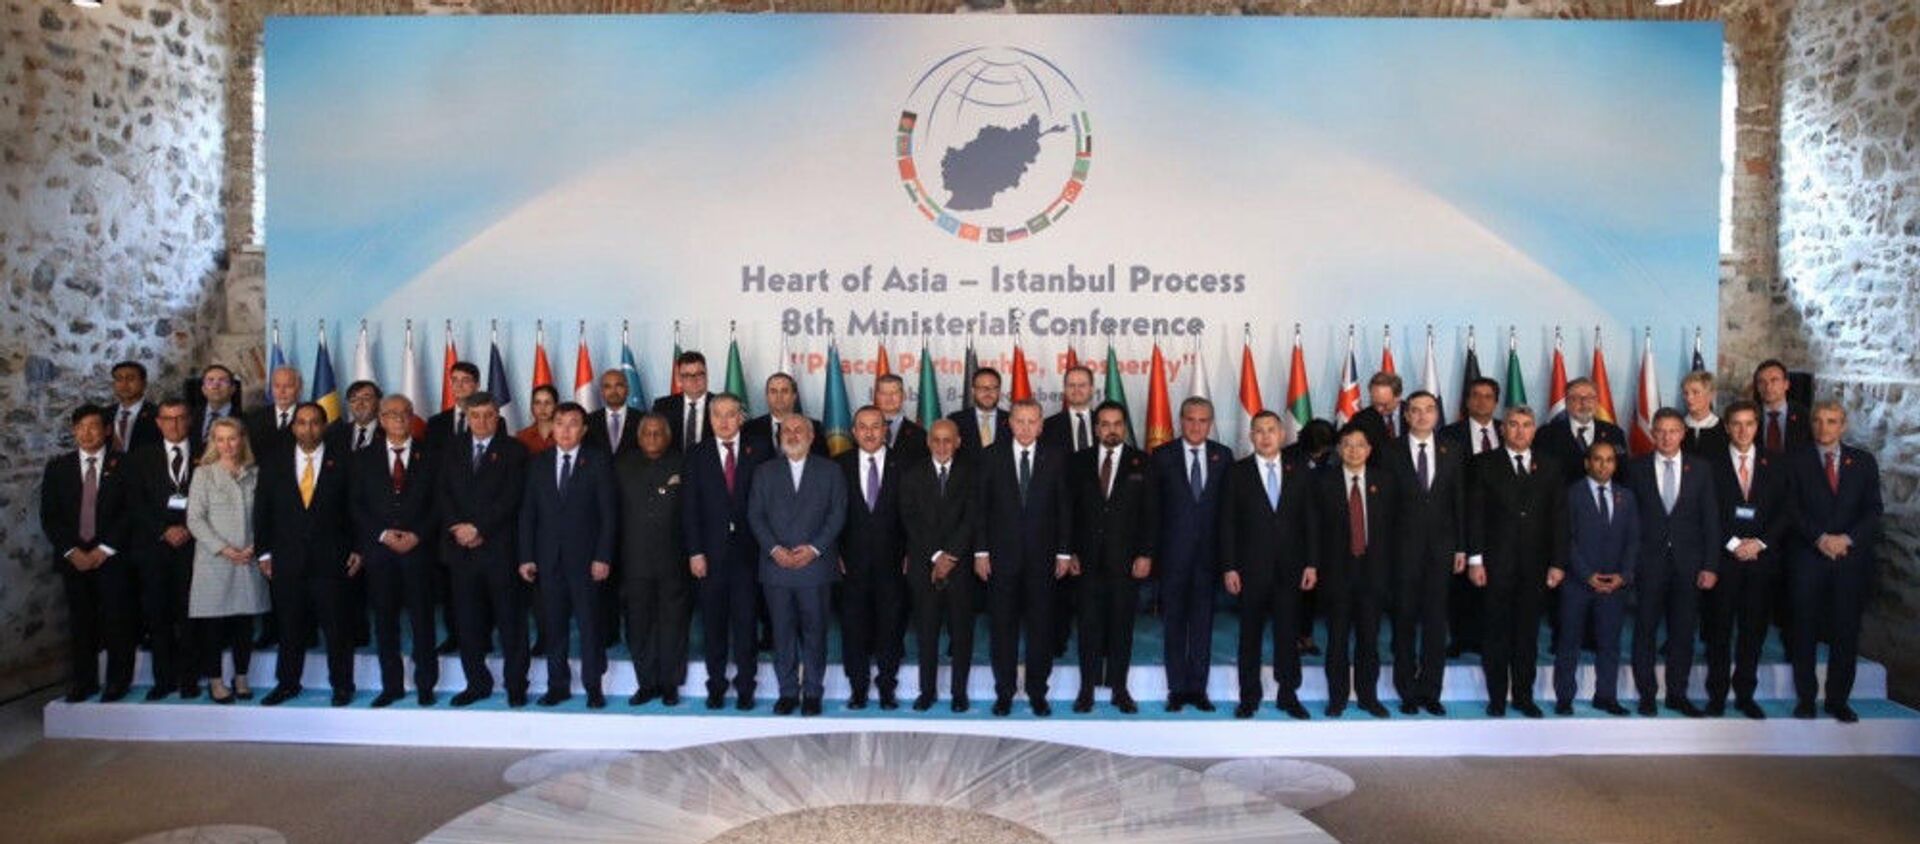 8-я министерская конференция Сердце Азии/Стамбульский процесс  - Sputnik Таджикистан, 1920, 26.02.2021